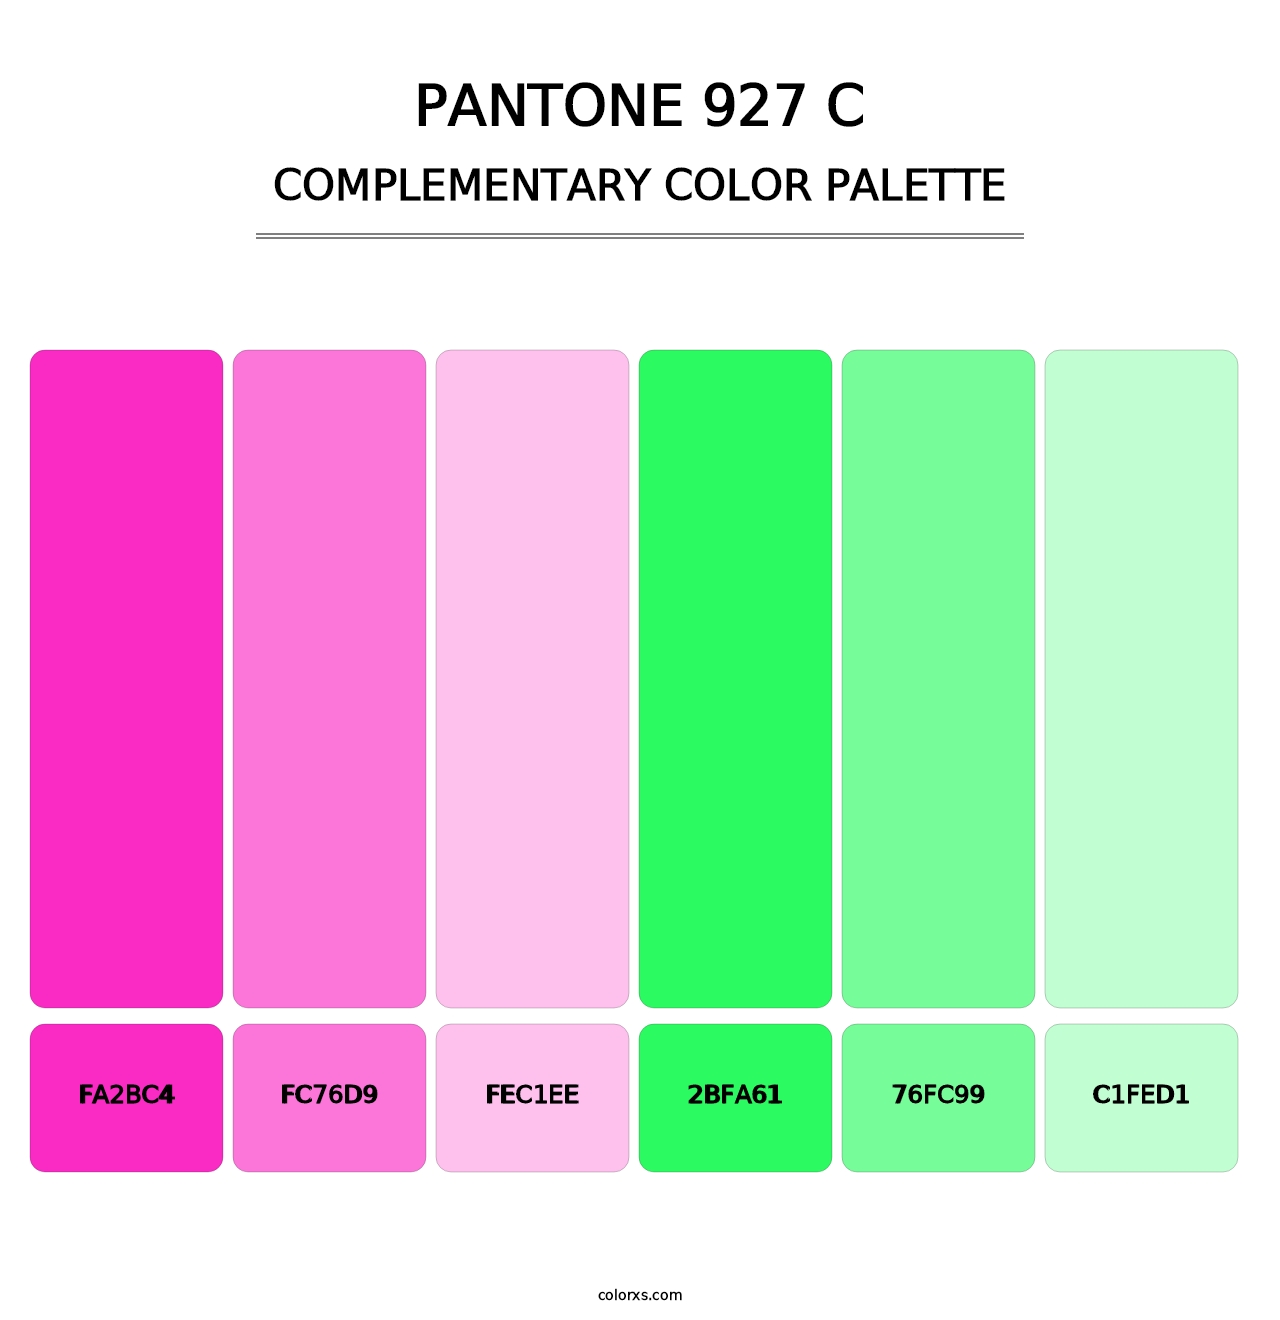 PANTONE 927 C - Complementary Color Palette